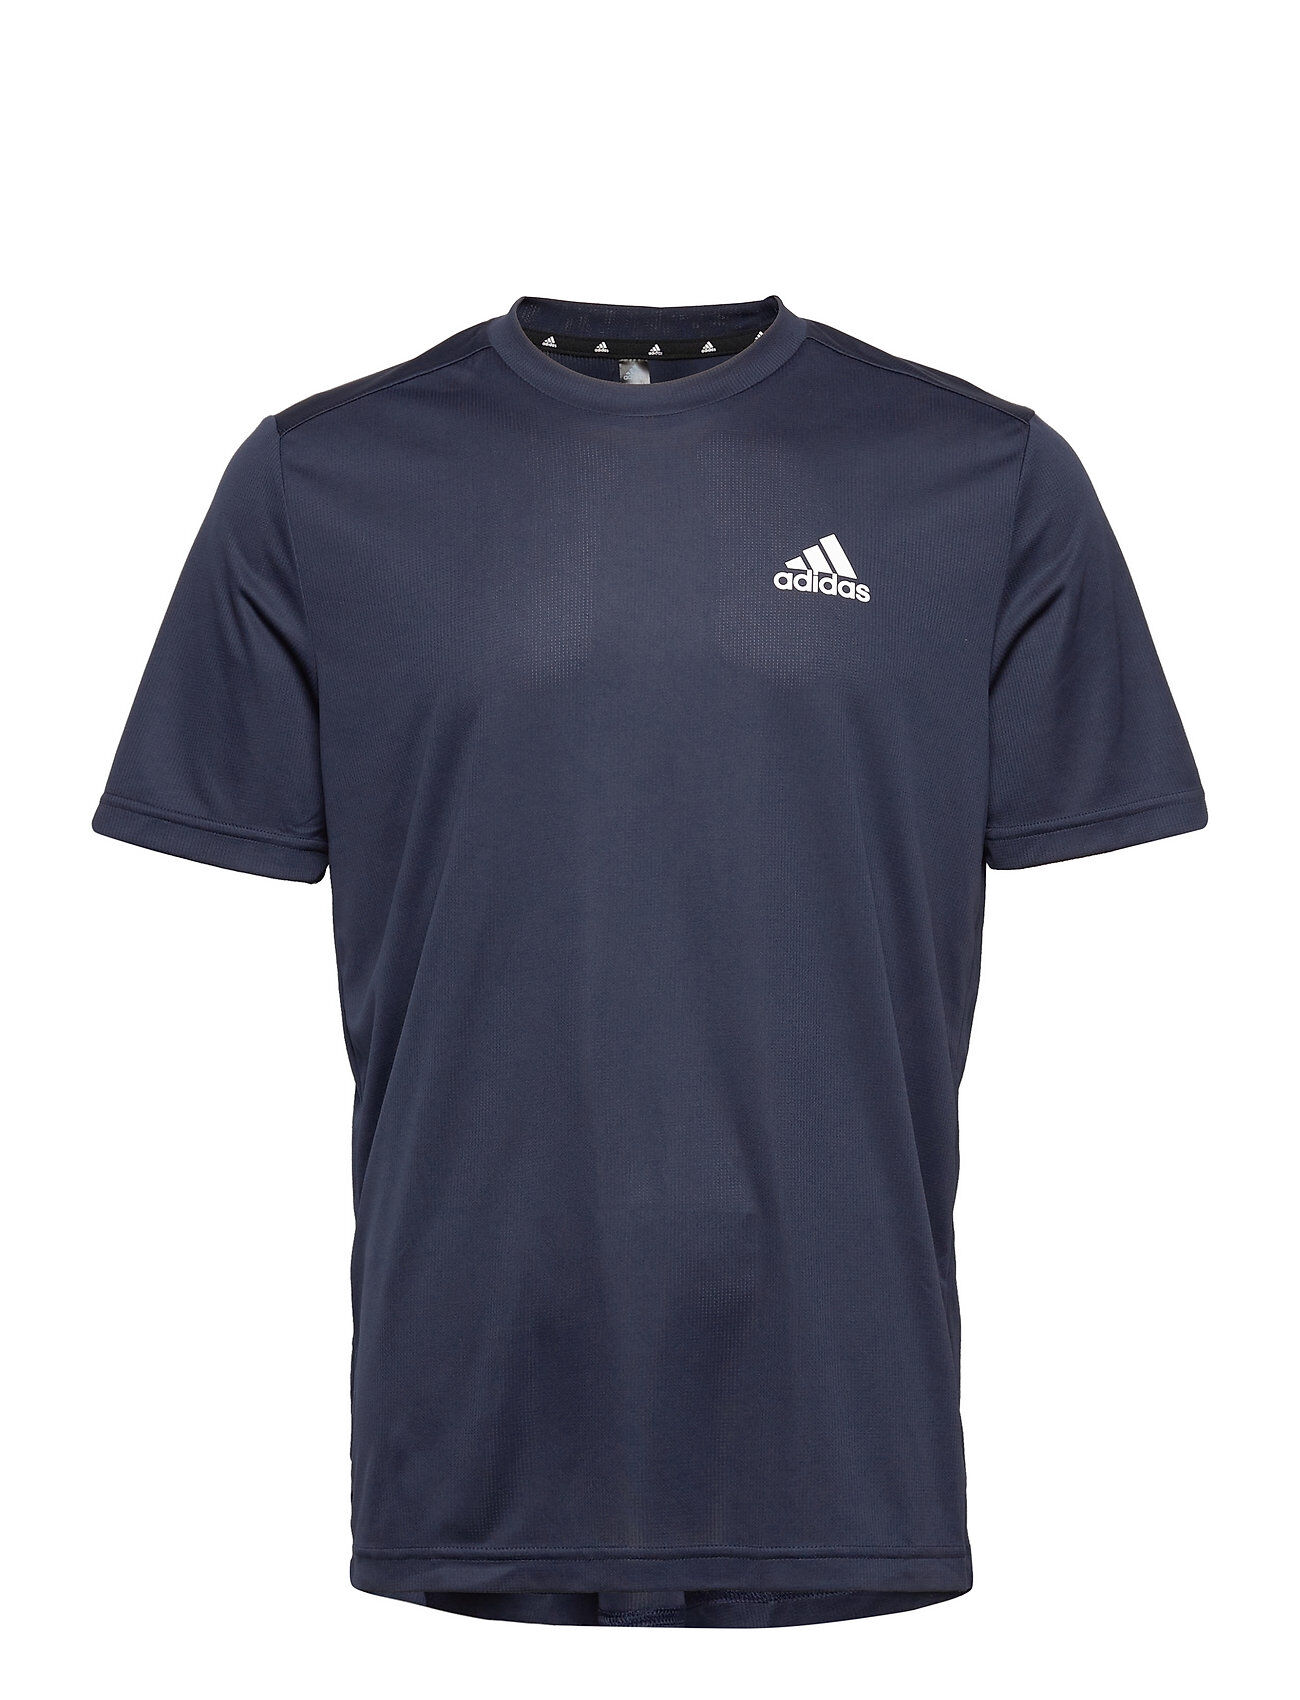 adidas Performance Aeroready Designed To Move Sport Tee T-shirts Short-sleeved Blå Adidas Performance